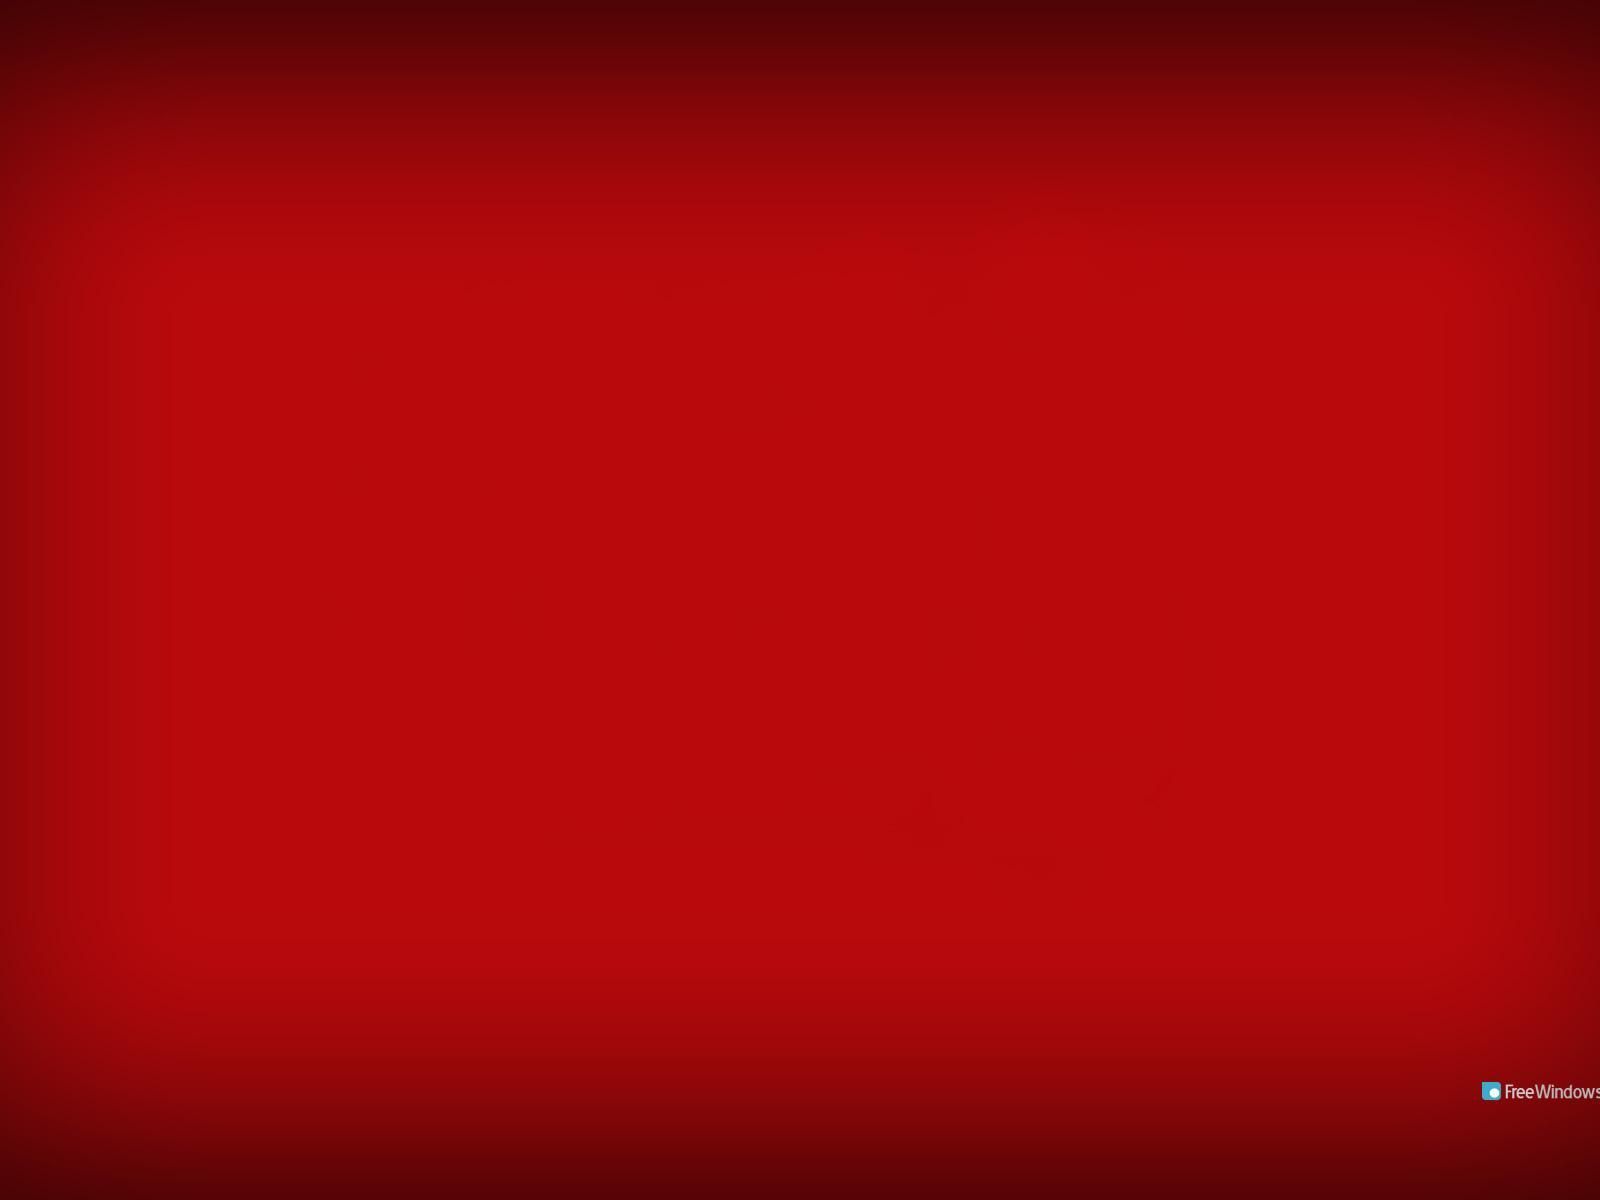 Plain Red Desktop Background. Beautiful Widescreen Desktop Wallpaper, Desktop Wallpaper and Naruto Desktop Background